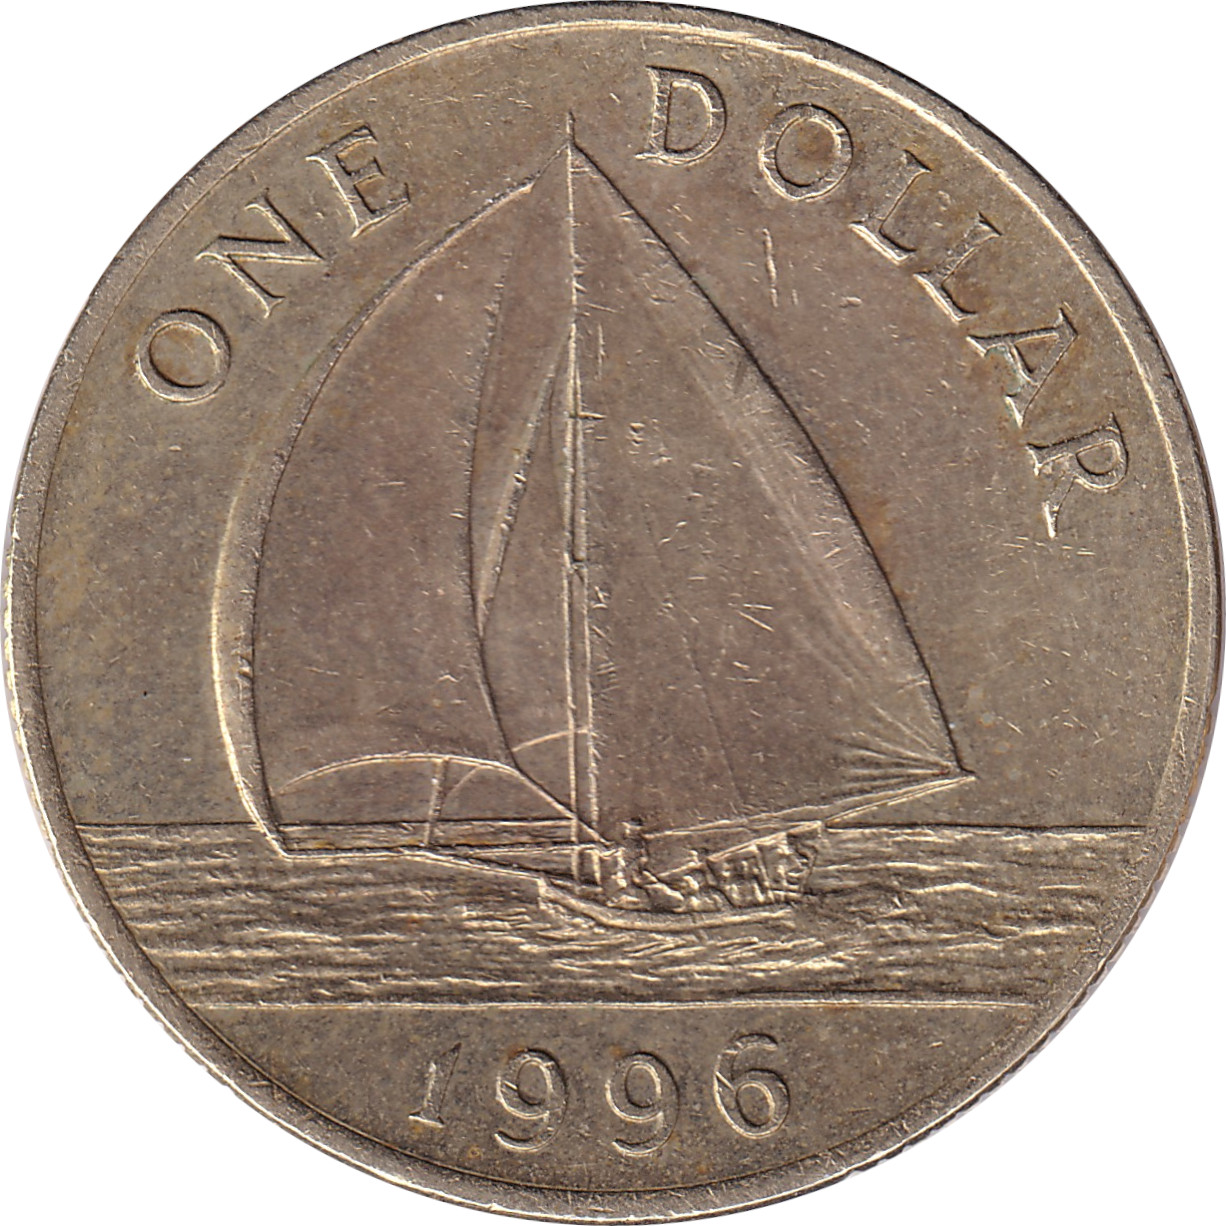 1 dollar - Elizabeth II • Tête mature